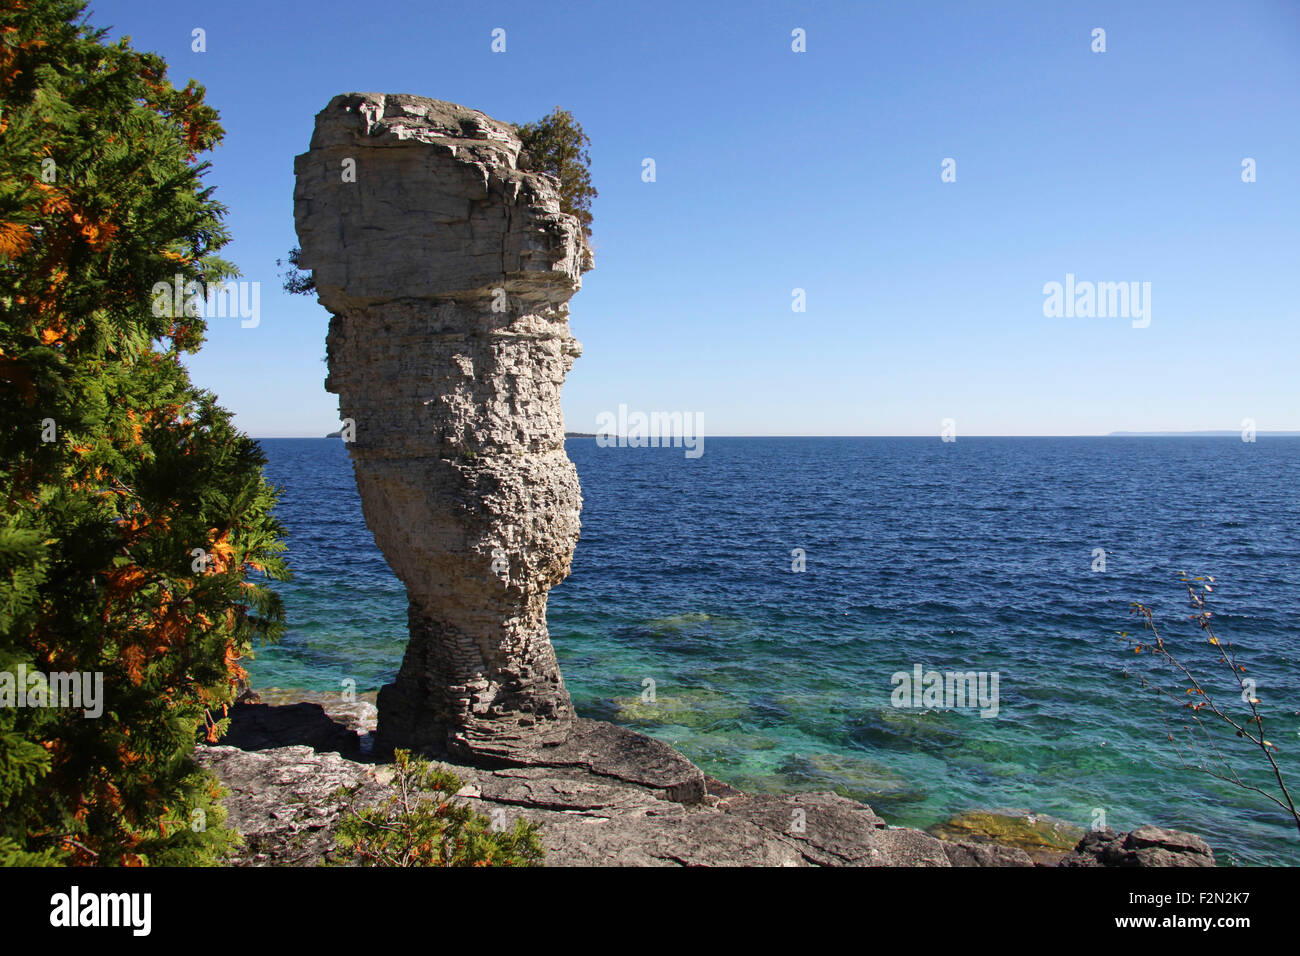 Large flowerpot rock formation (natural sea stacks), Flowerpot Island, Tobermory, Ontario, Canada. Stock Photo